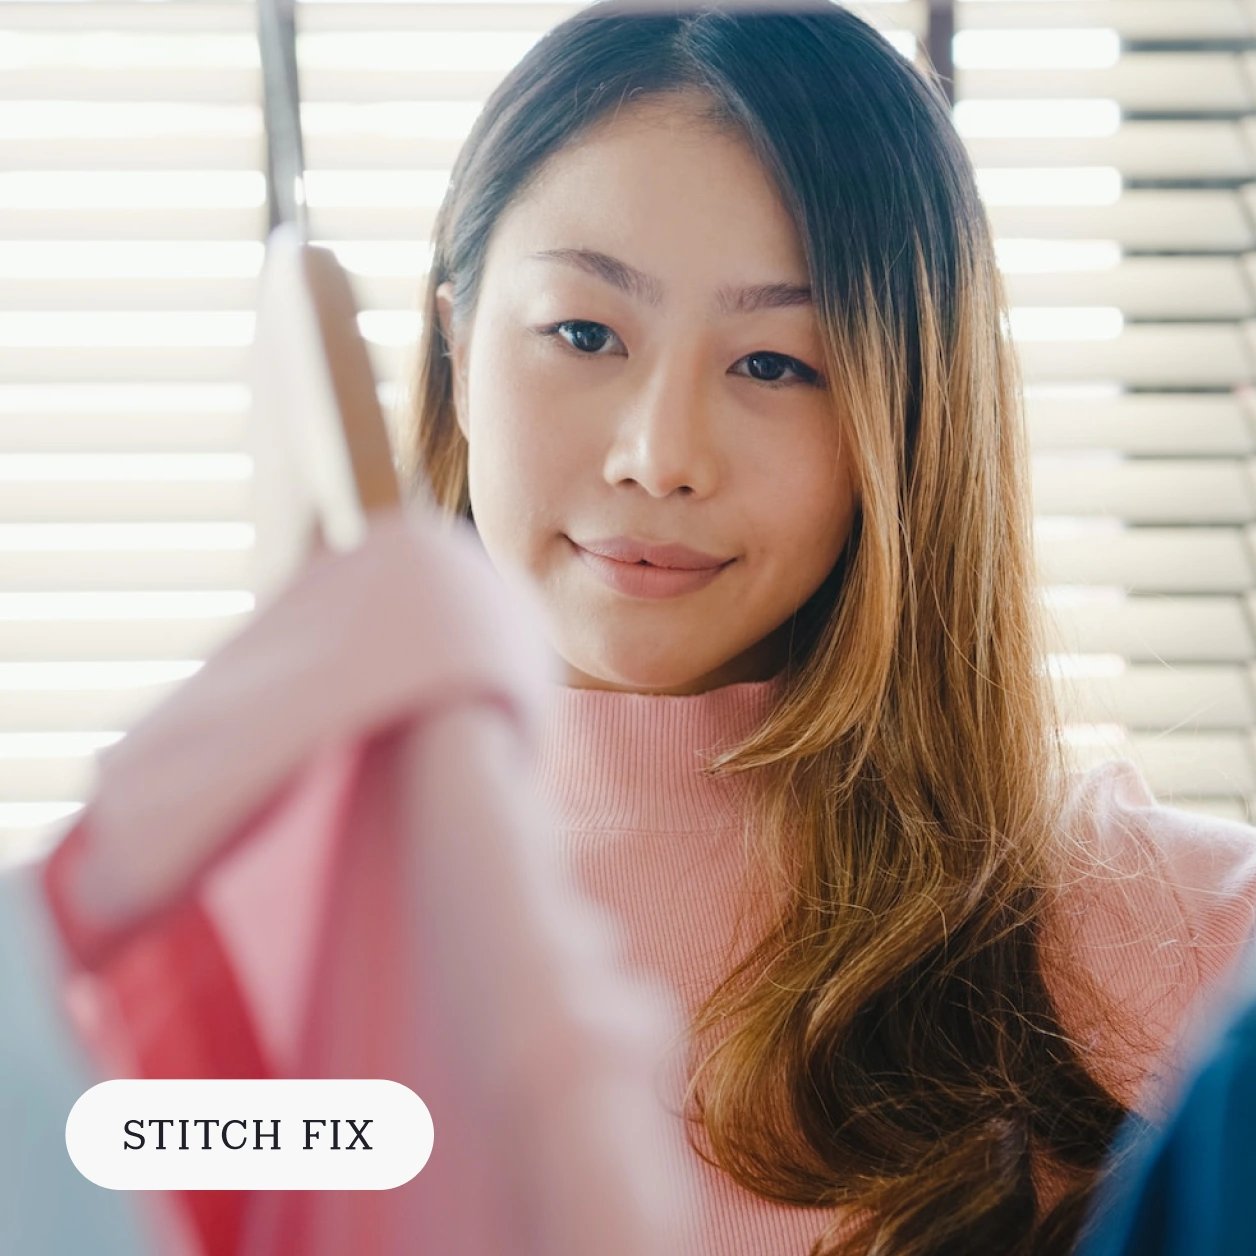 stitch fix case study solution